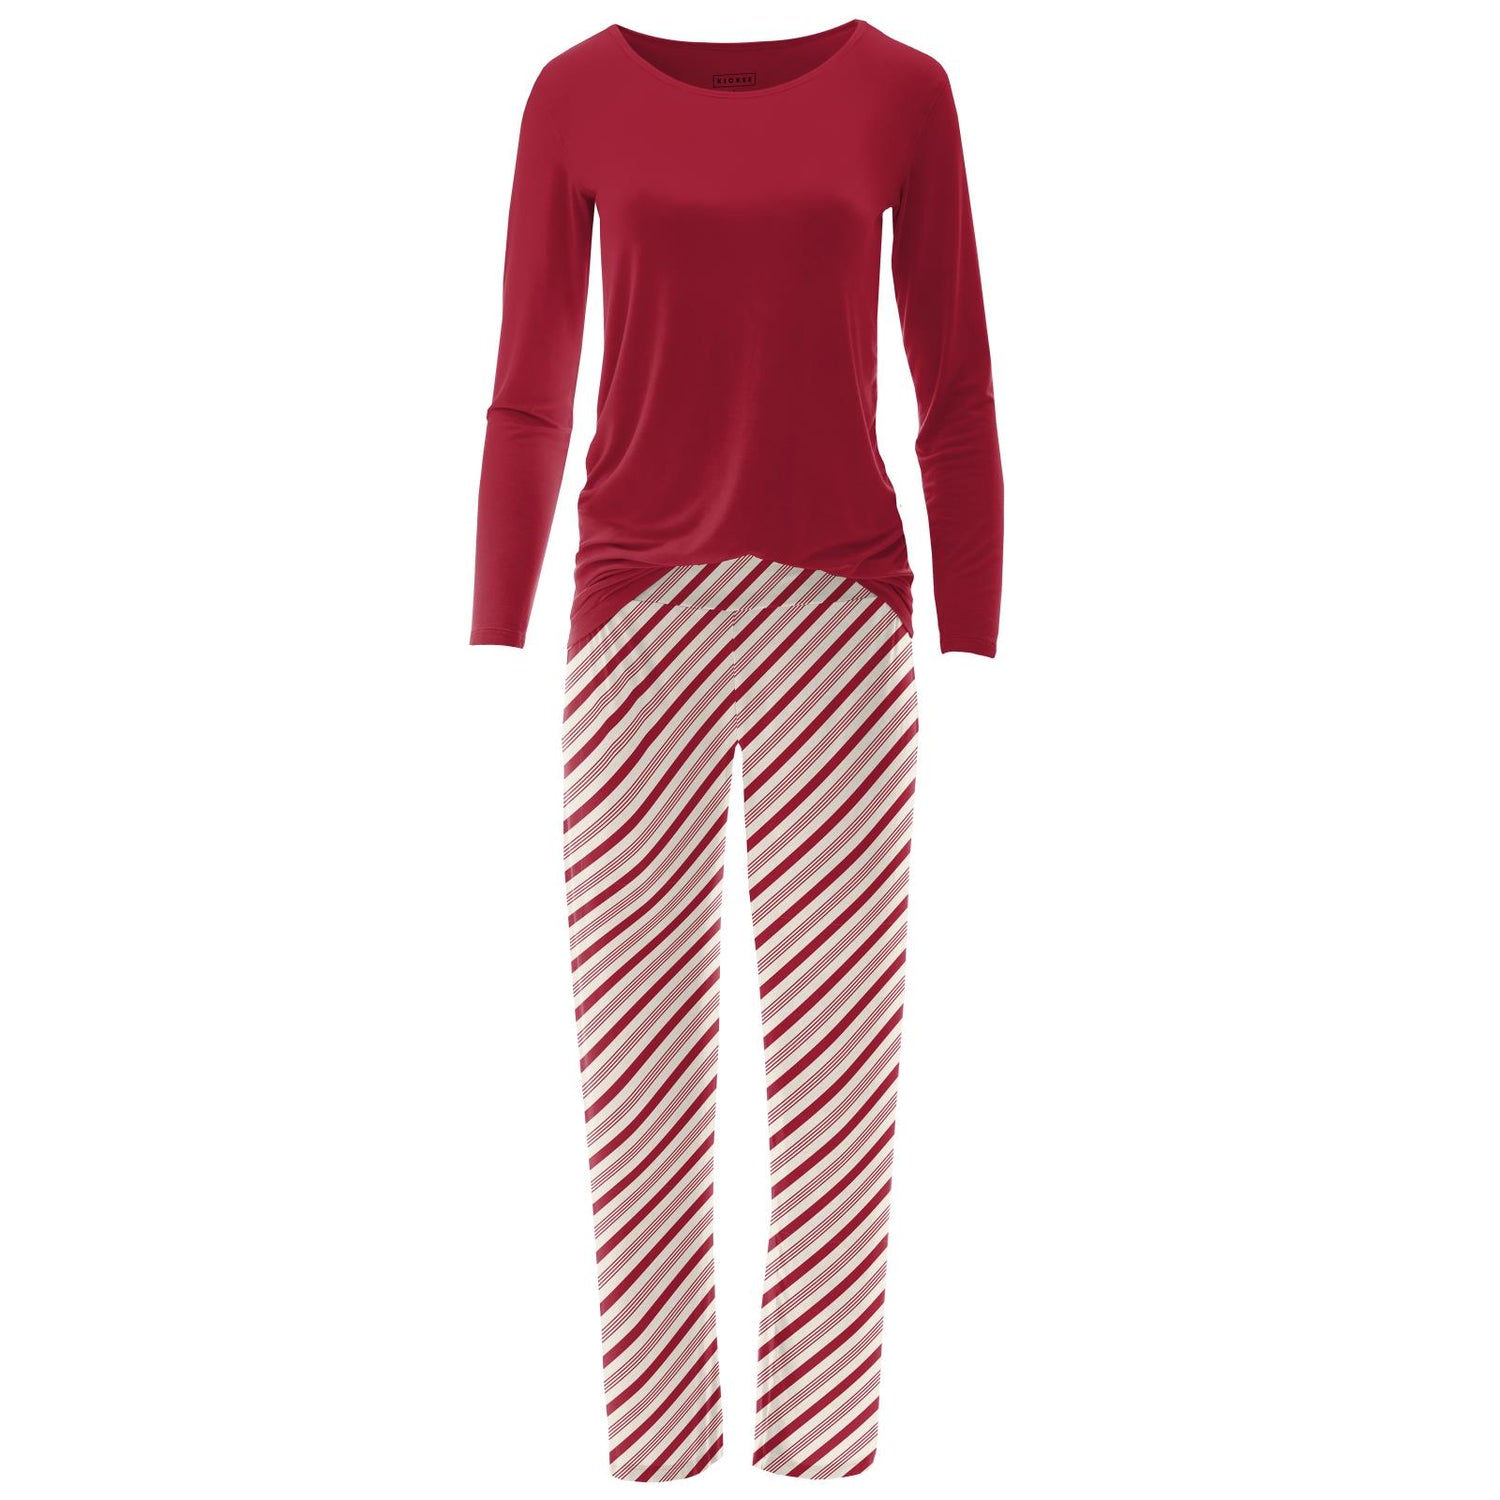 Women's Long Sleeve Loosey Goosey Tee & Pajama Pants Set in Crimson Candy Cane Stripe